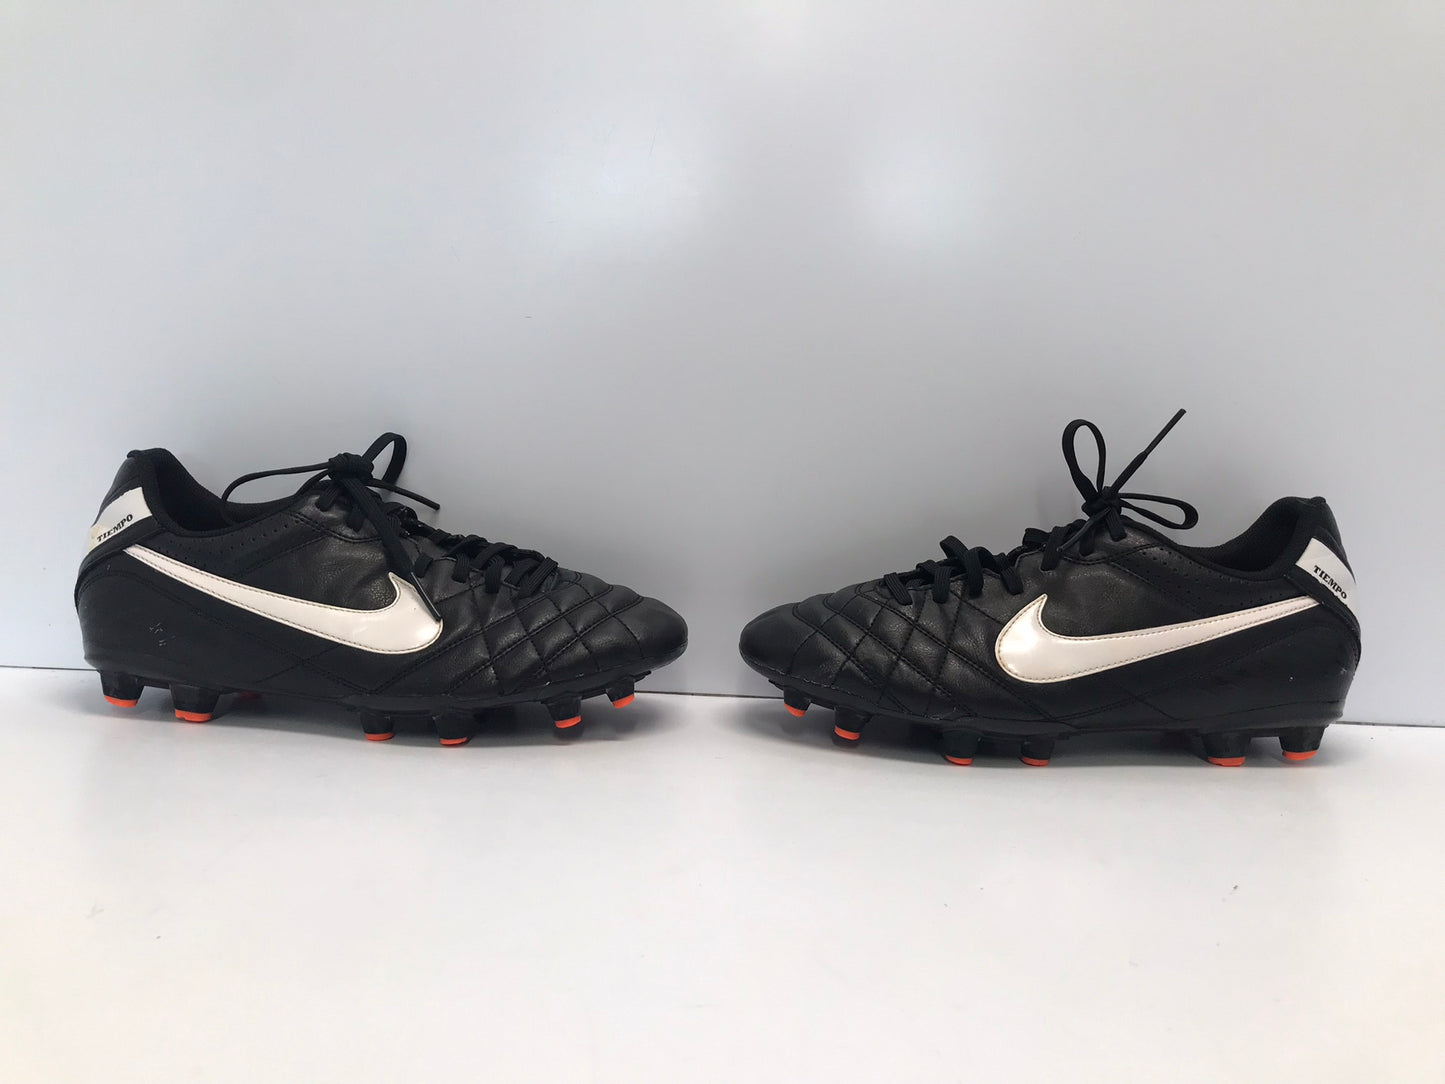 Soccer Shoes Cleats Men's Size 8.5 Nike Tiempo Black White Excellent